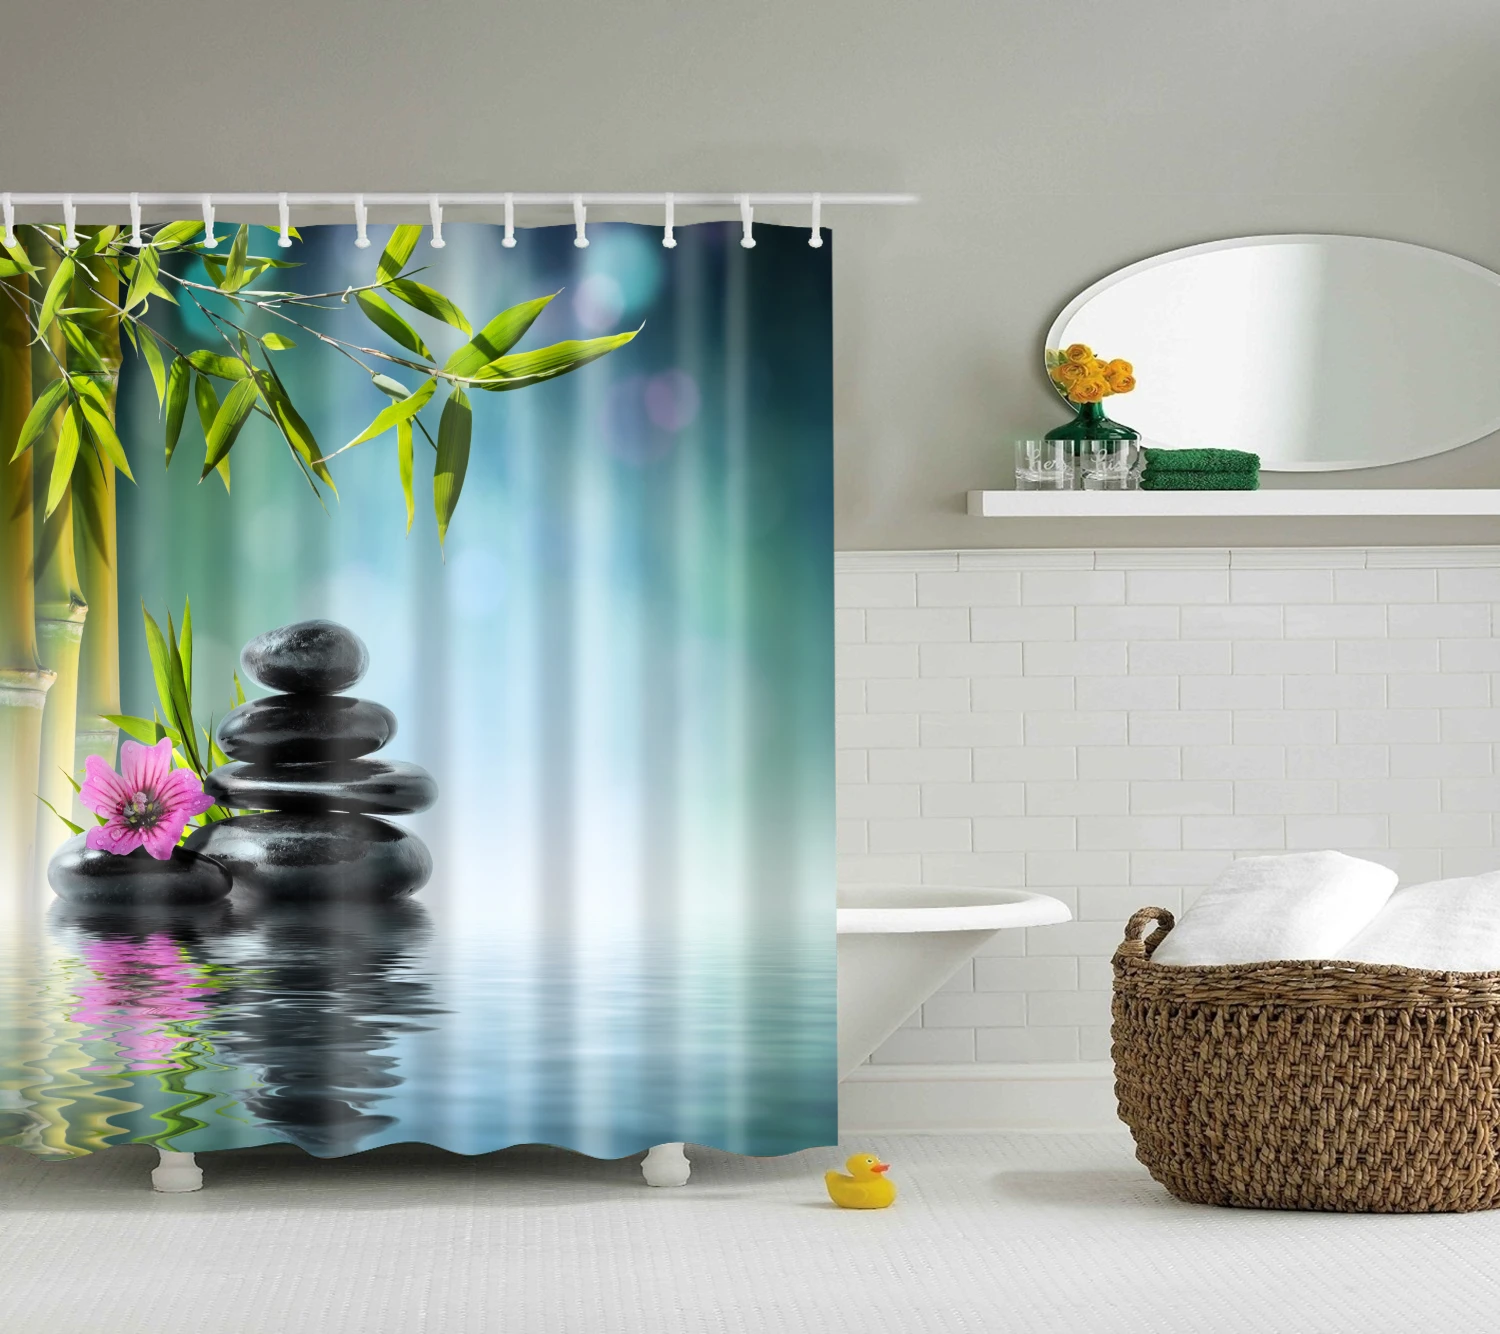 Waterproof Polyester Fabric Landscape Bamboo & Hooks Bathroom Shower Curtain 